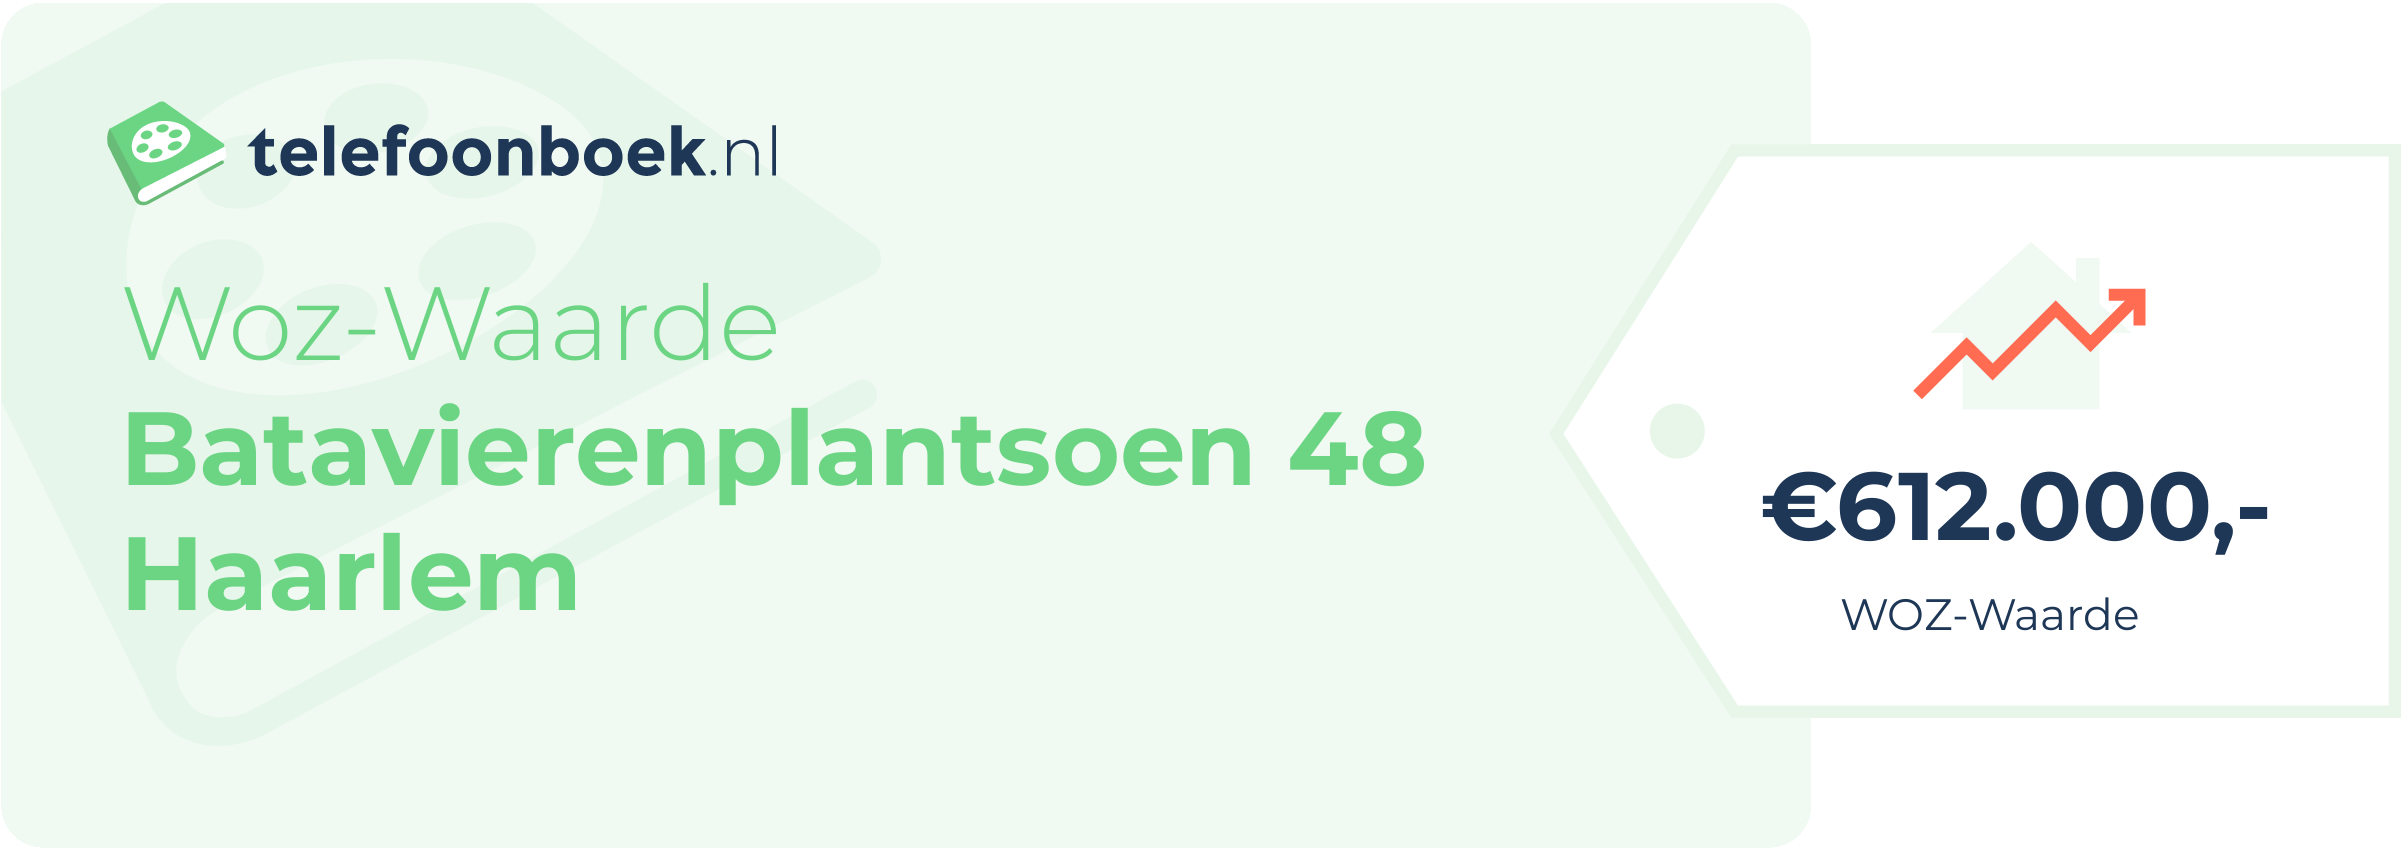 WOZ-waarde Batavierenplantsoen 48 Haarlem